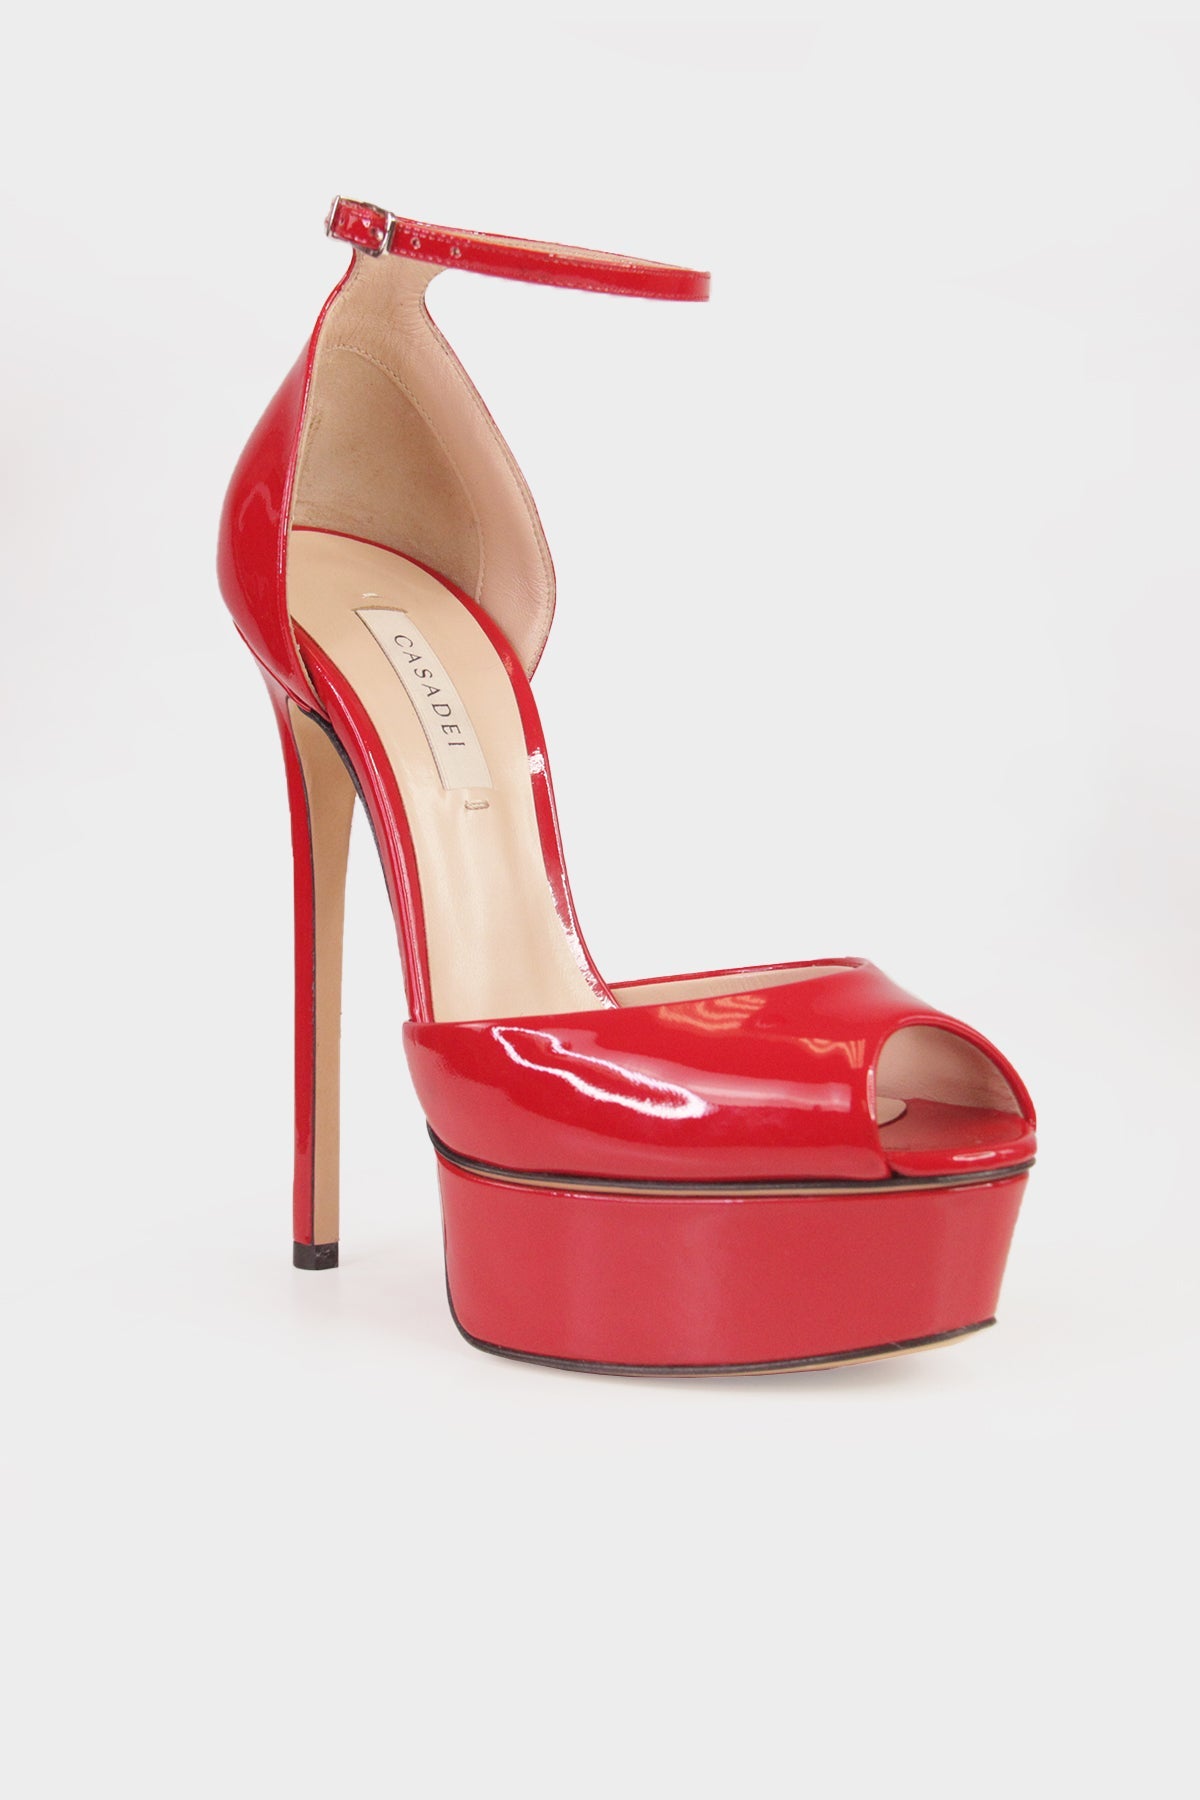 Tiffany Pantent Heel in Red - shop-olivia.com